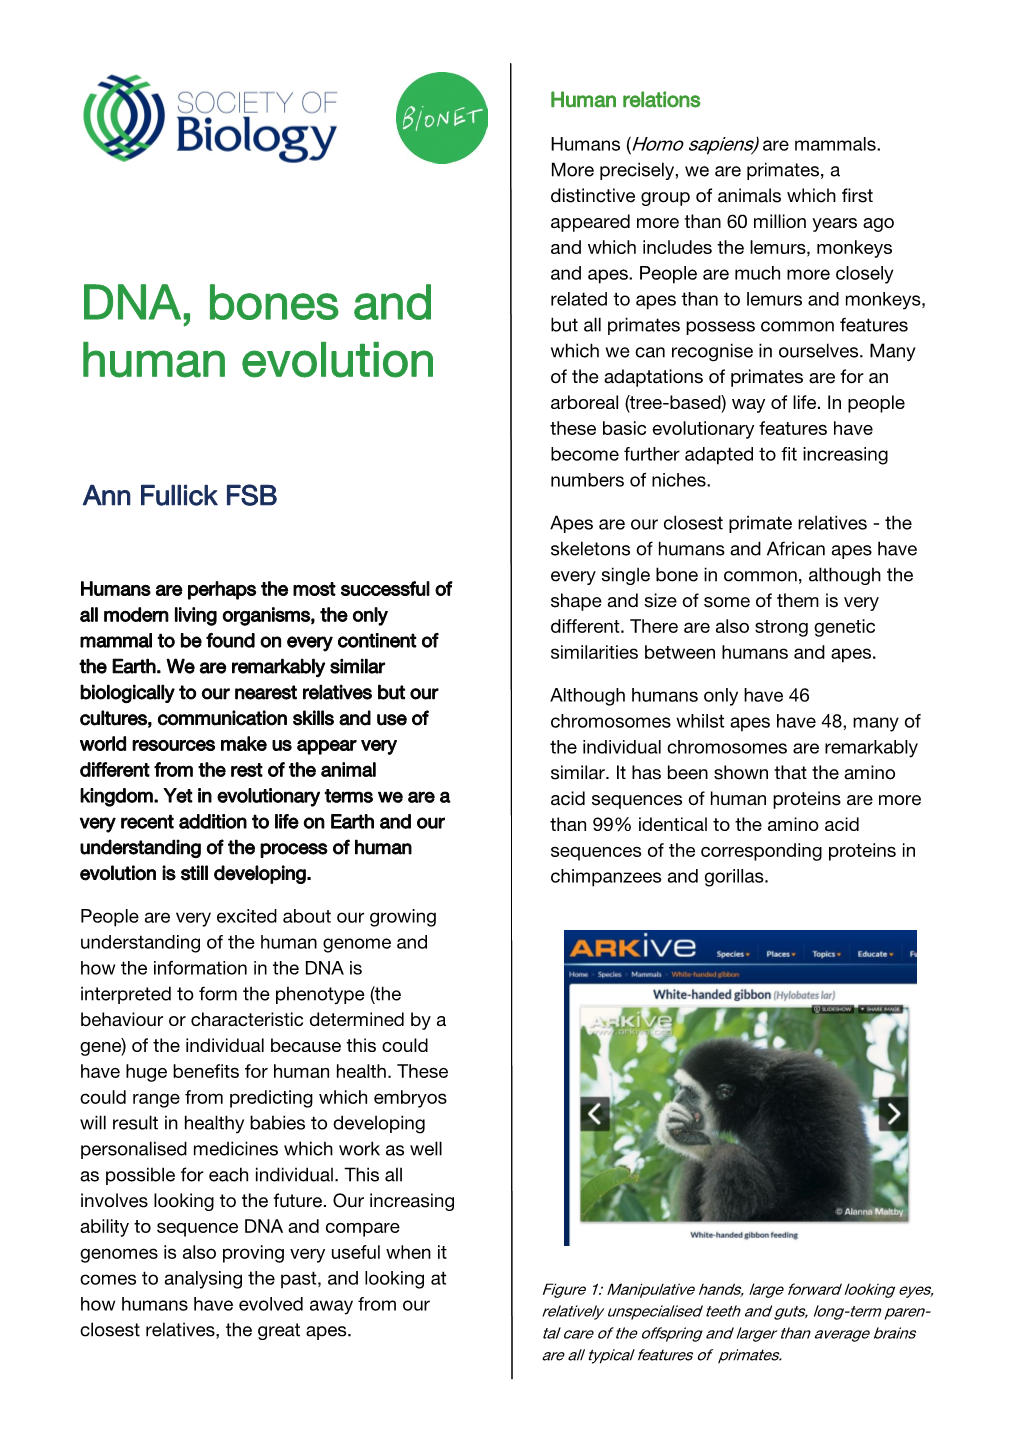 DNA, Bones and Human Evolution